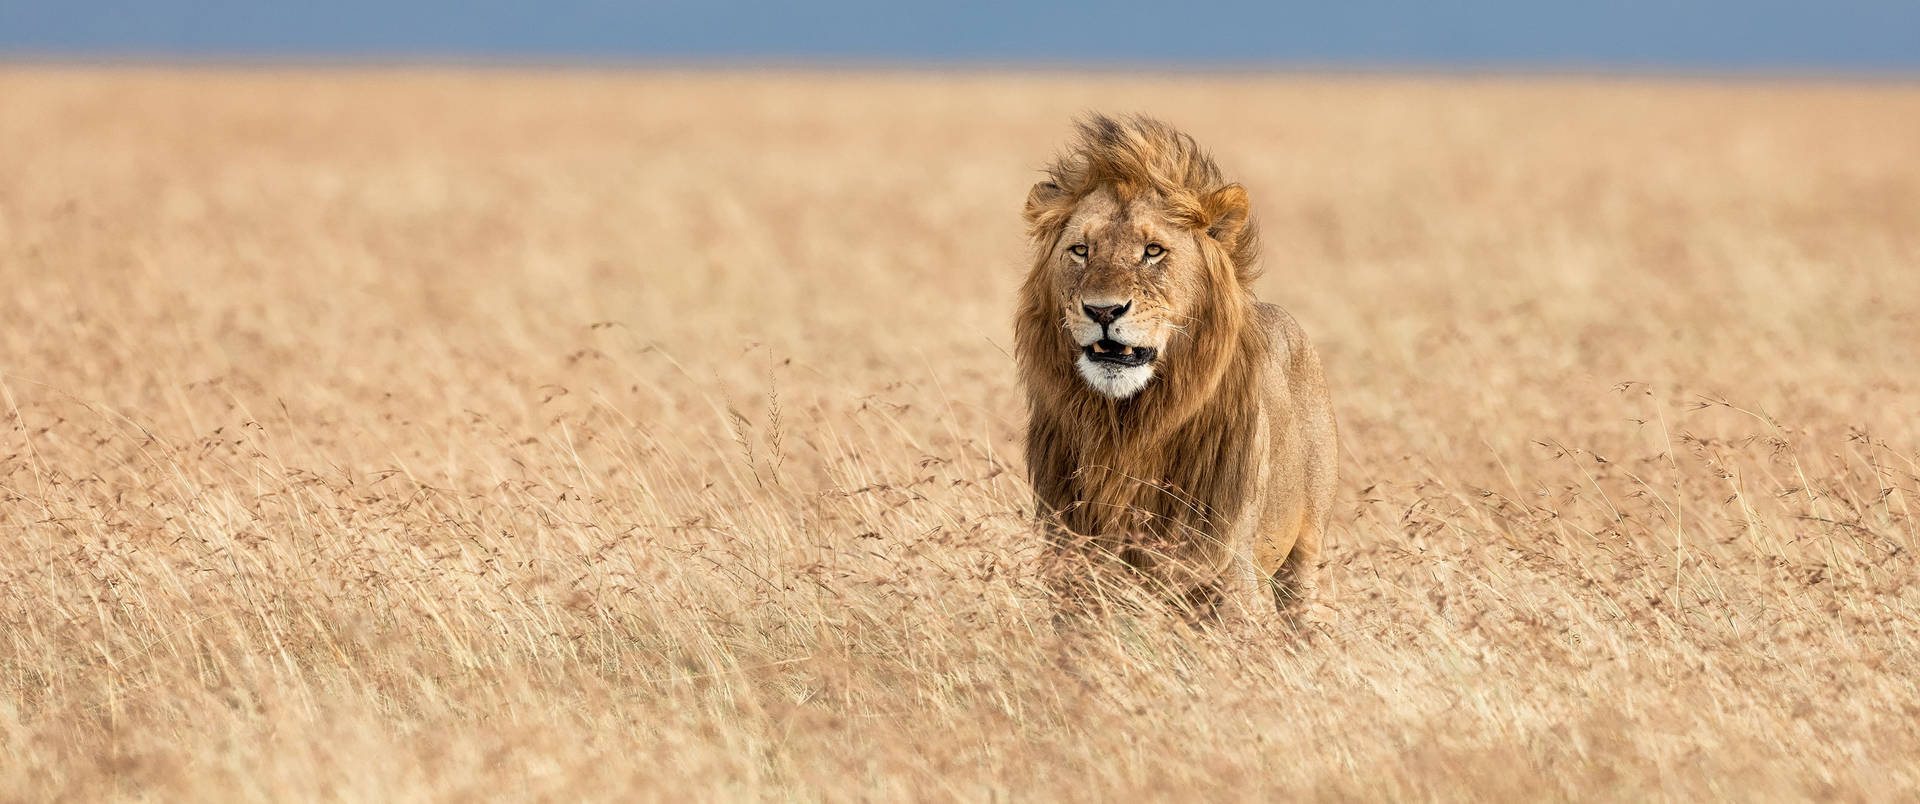 Ultra Wide 4k Lion Background